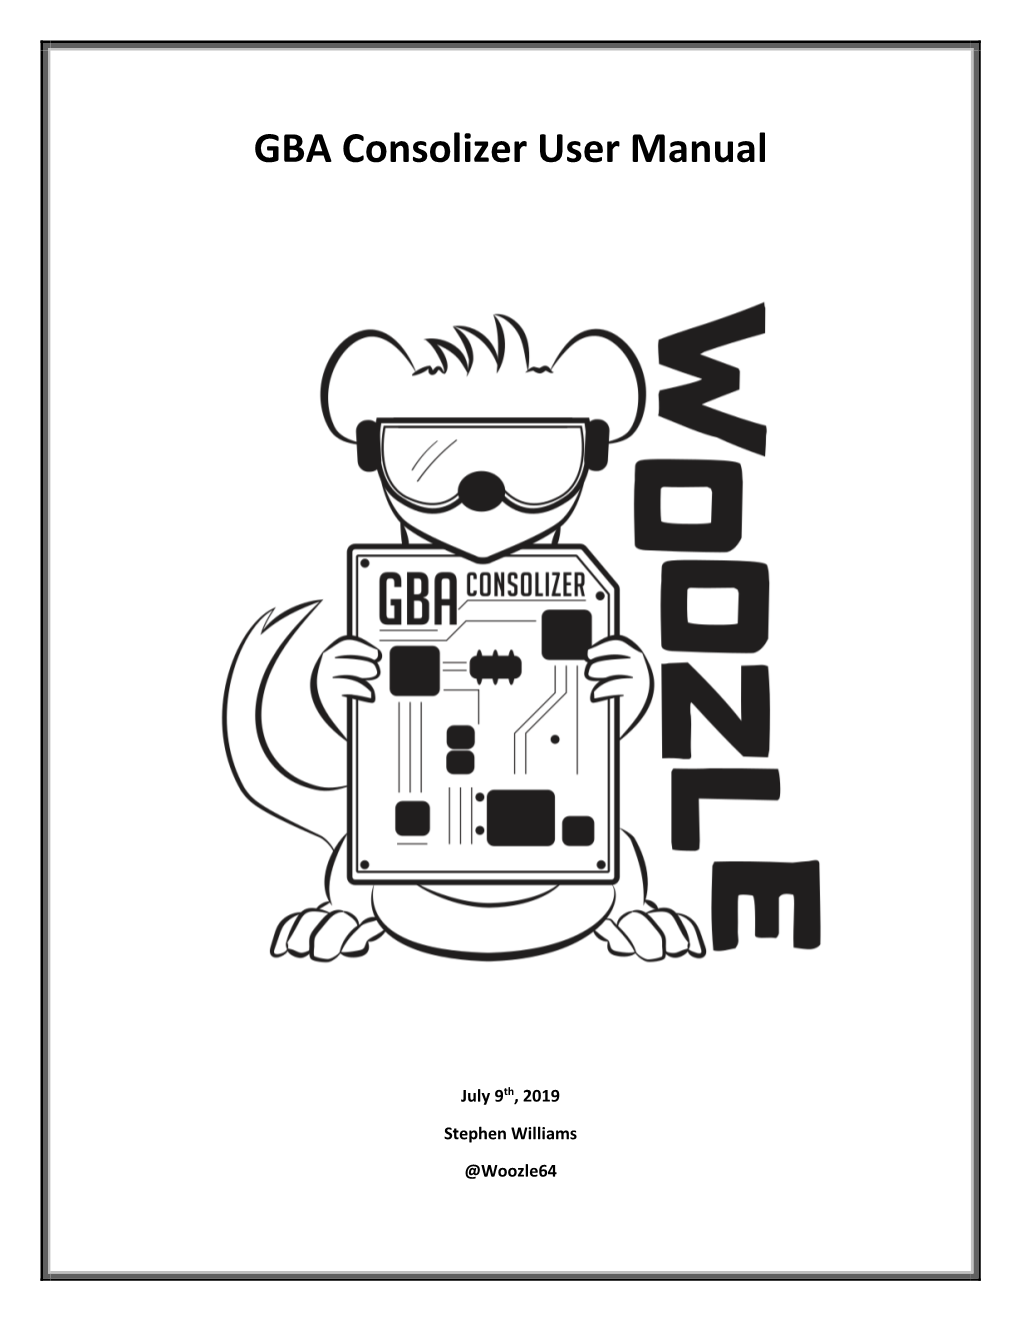 GBA Consolizer User Manual